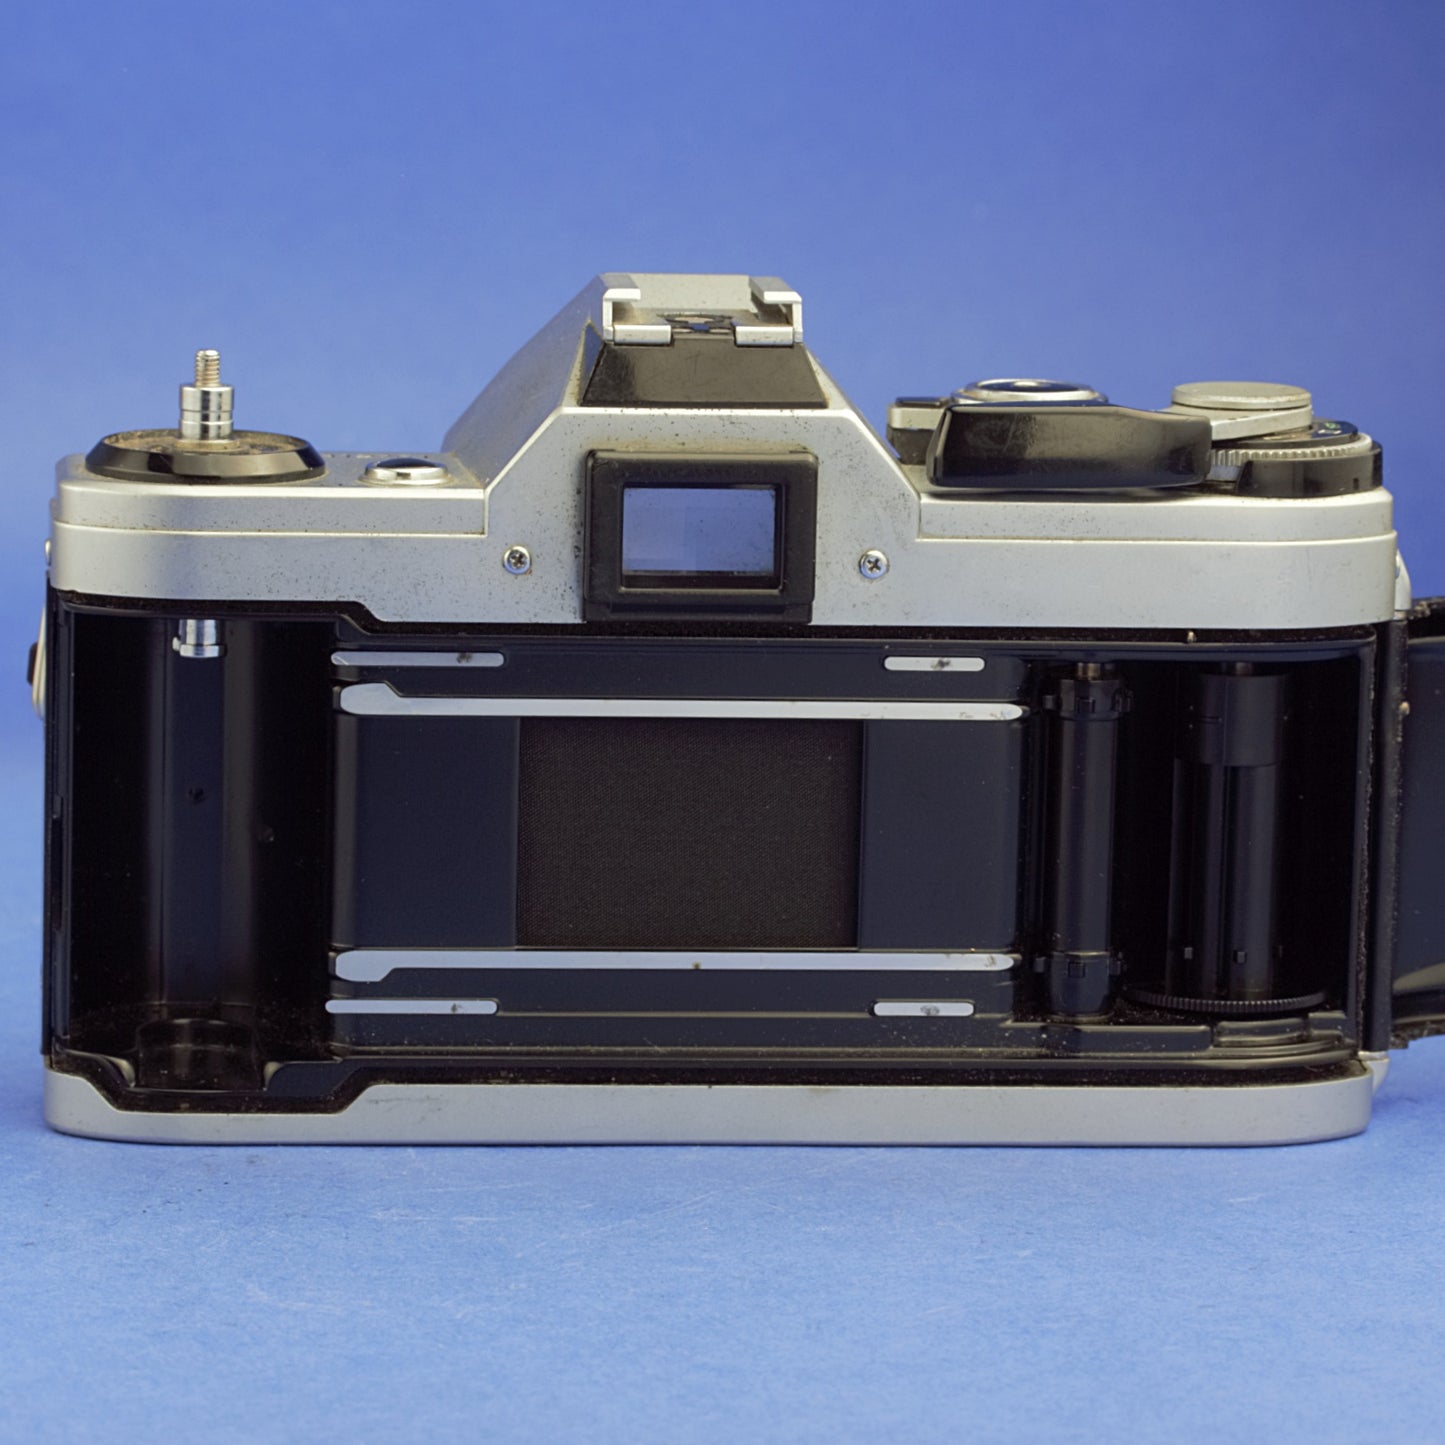 Canon AE-1 Film Camera Body Not Working